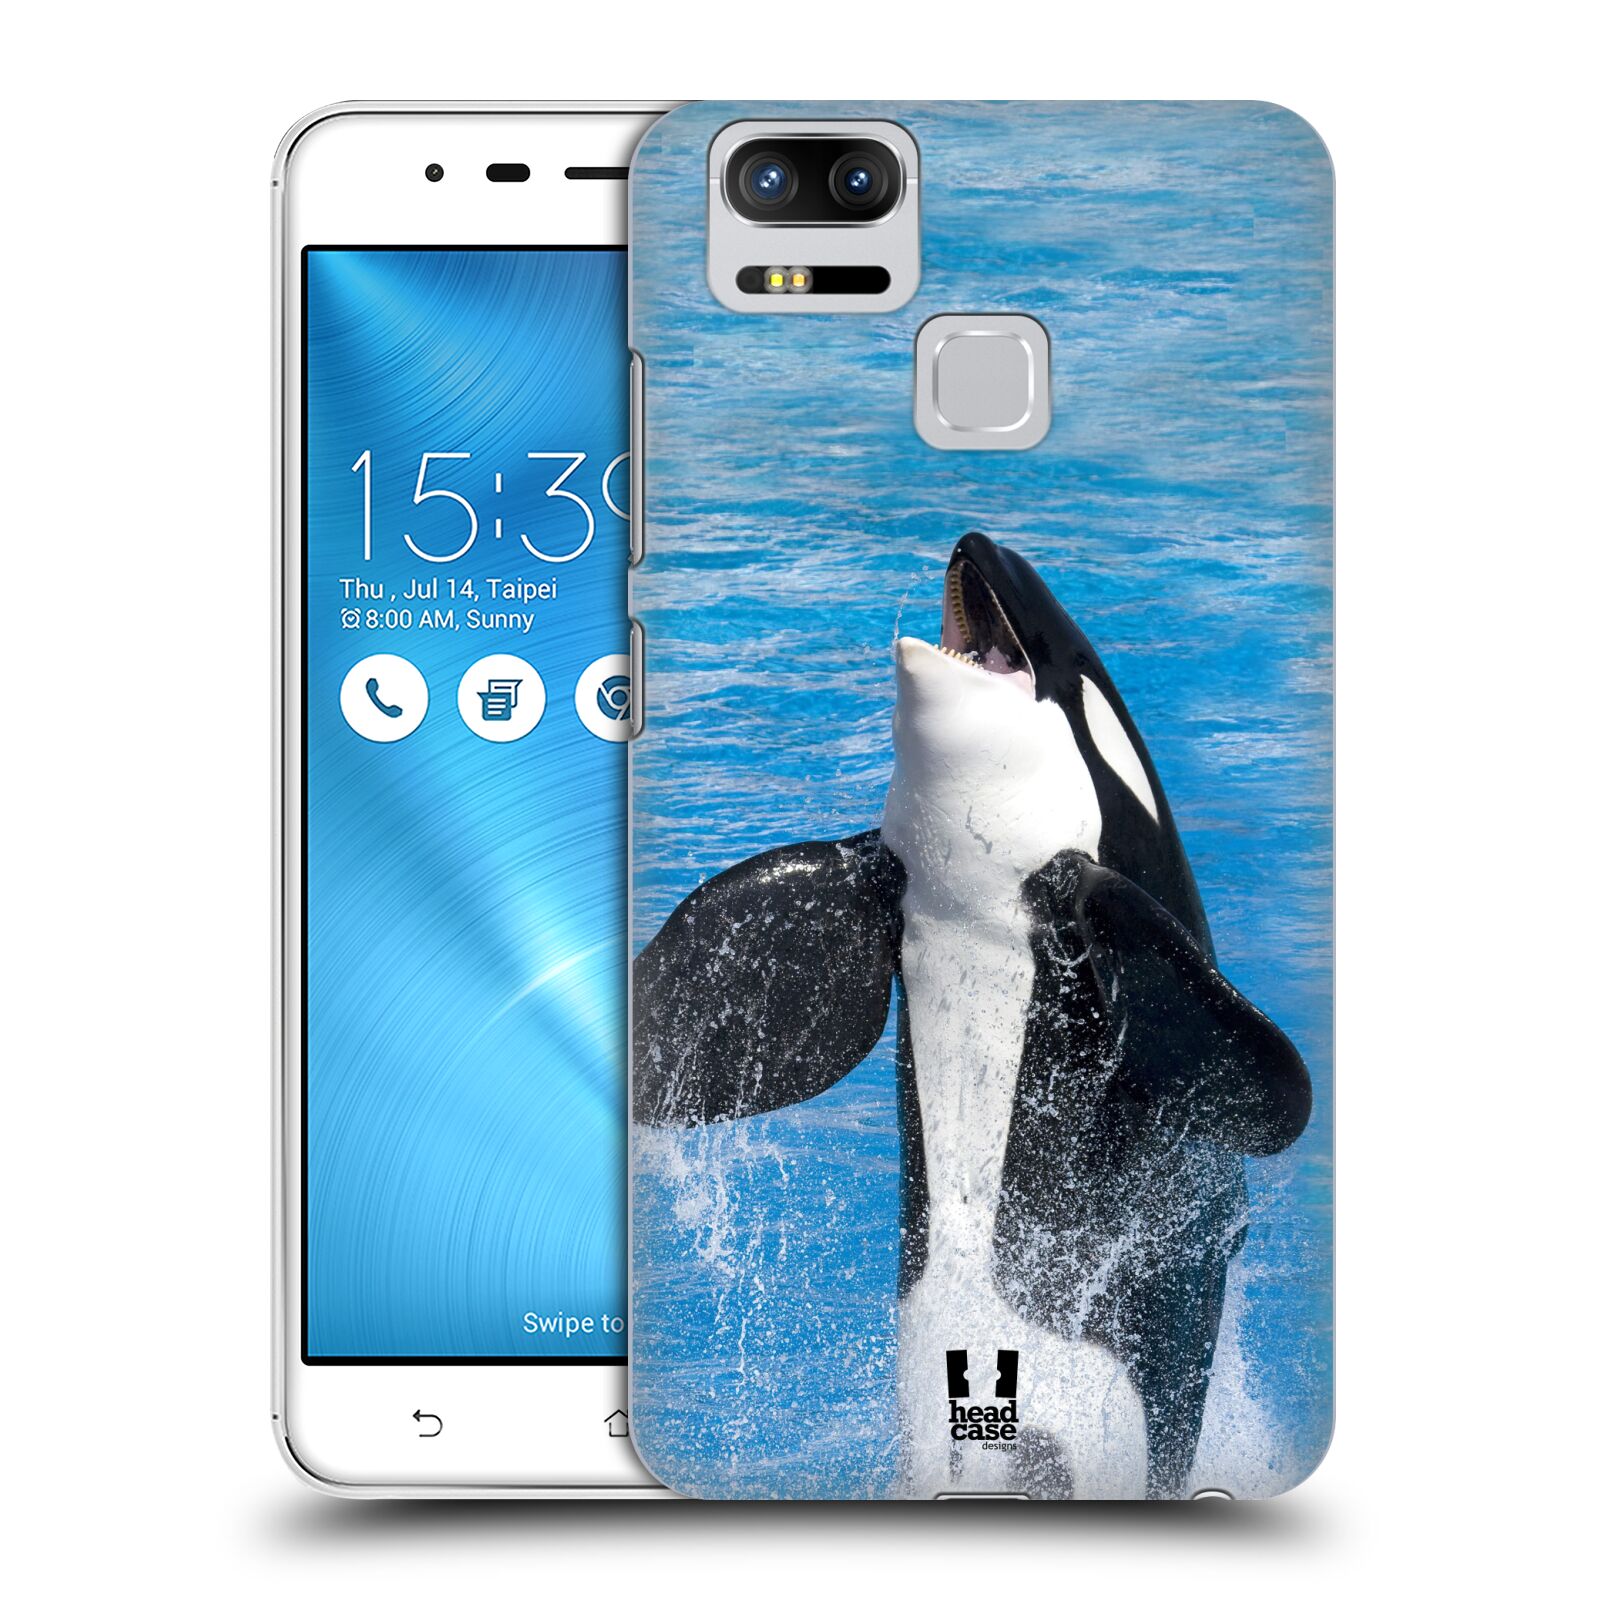 HEAD CASE plastový obal na mobil Asus Zenfone 3 Zoom ZE553KL vzor slavná zvířata foto velryba